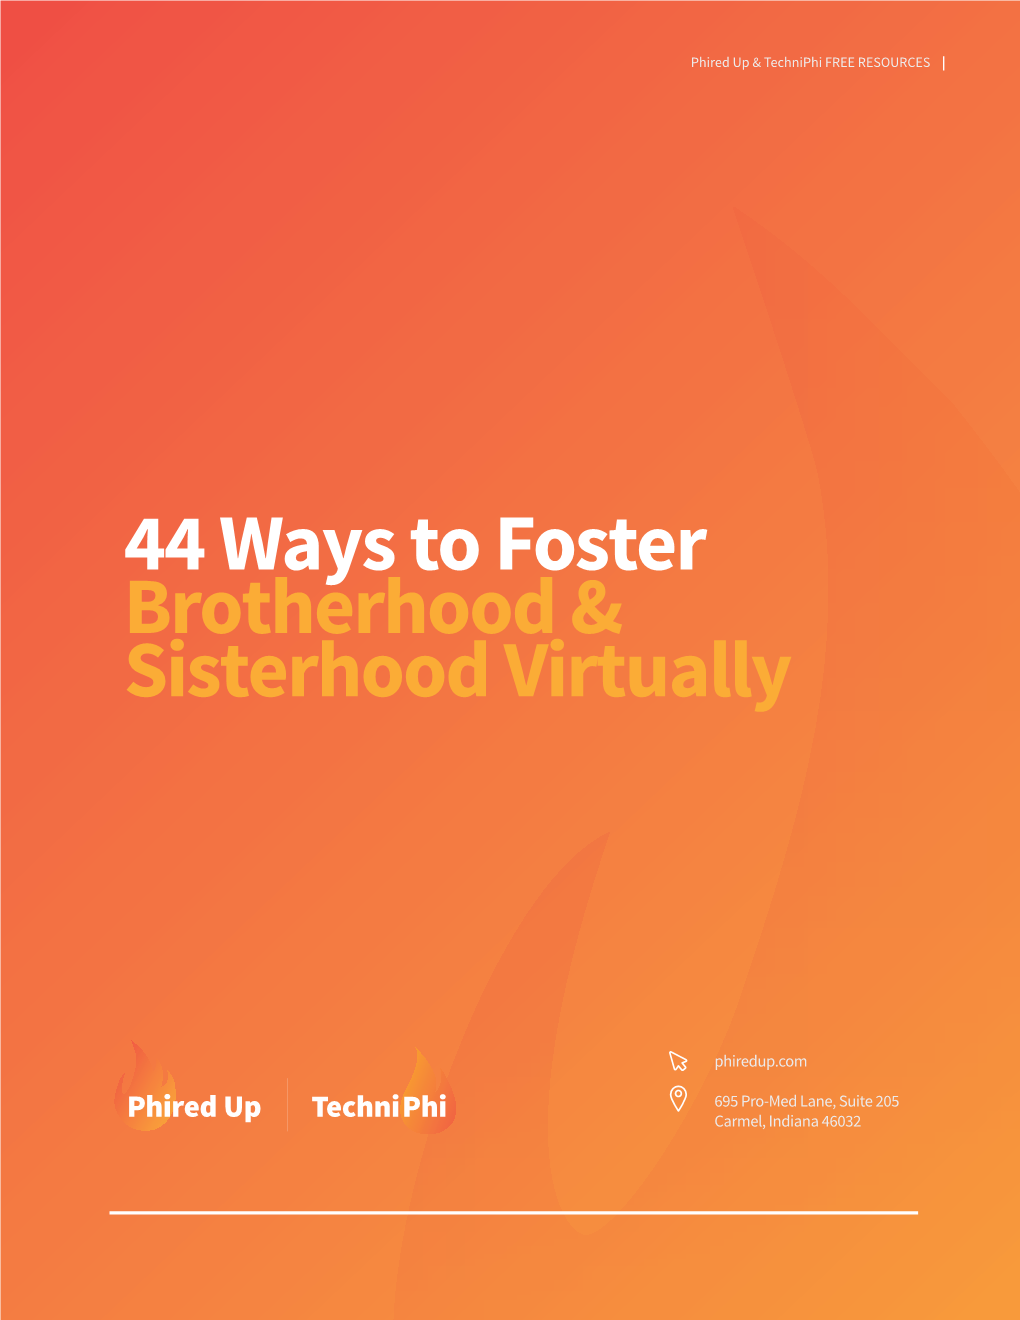 44 Ways to Foster Brotherhood & Sisterhood Virtually